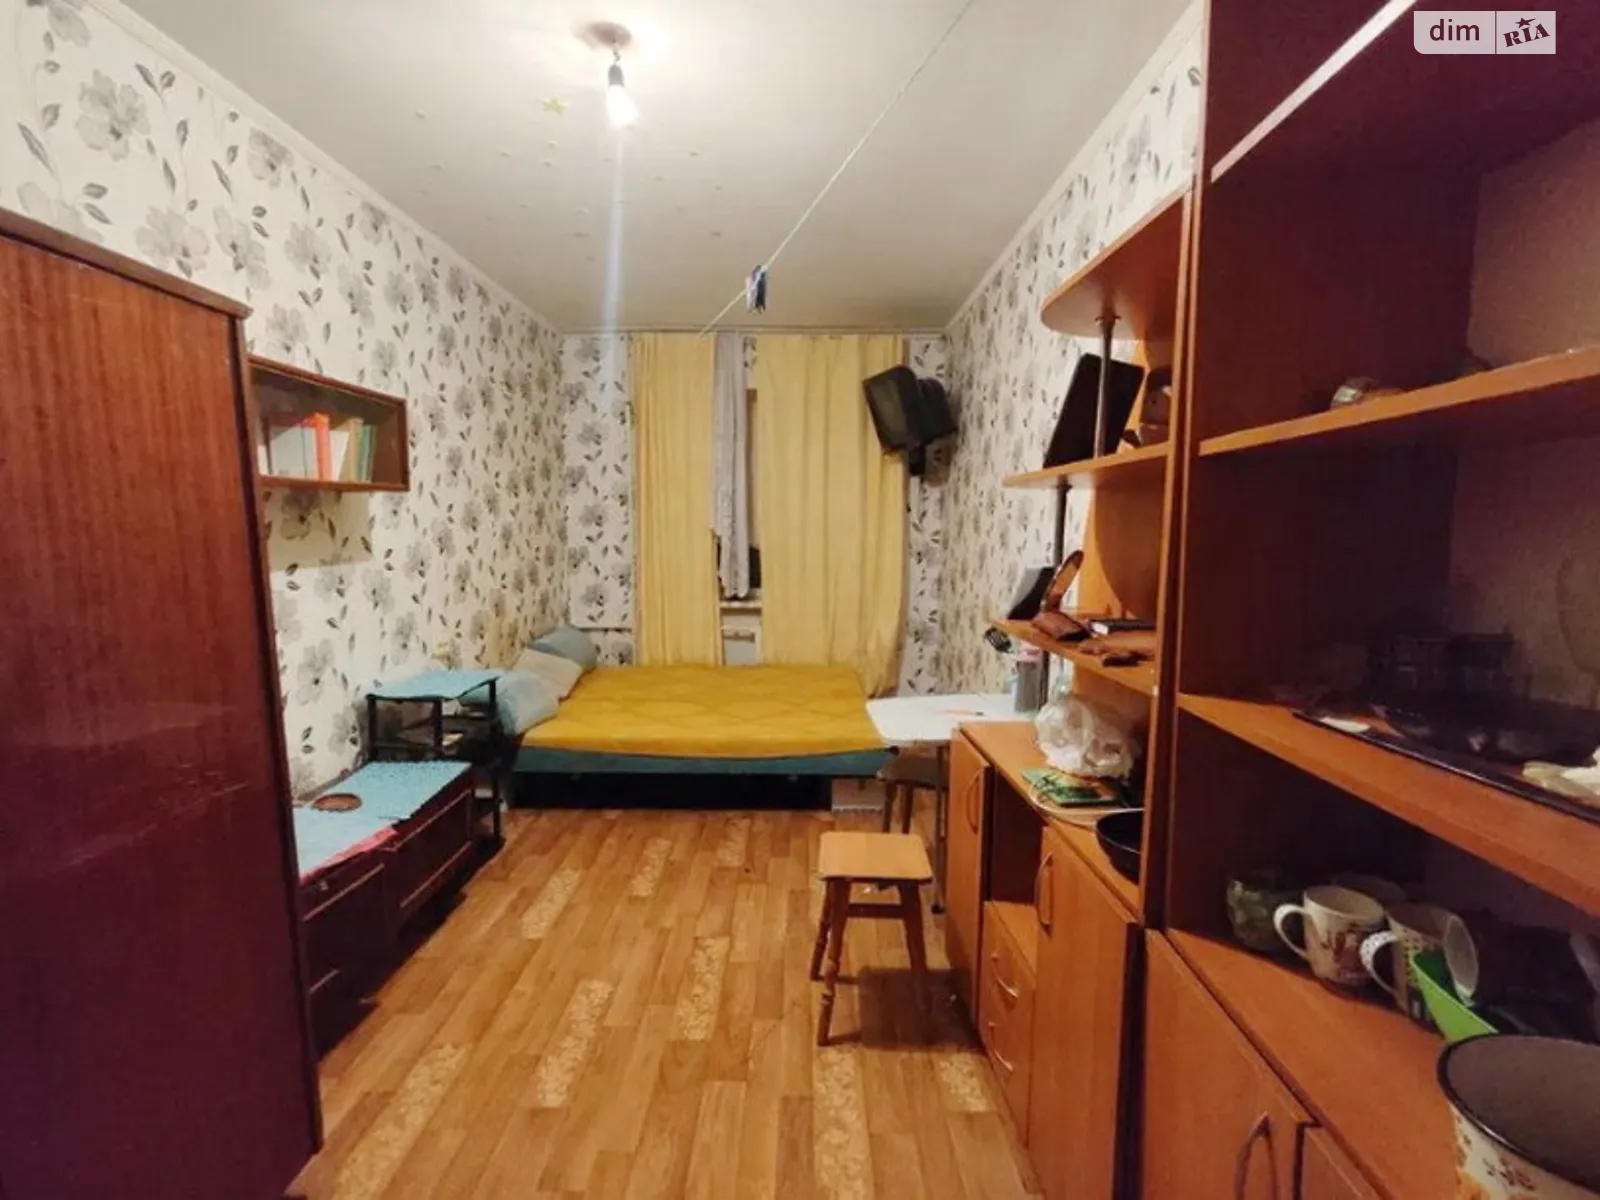 Продается комната 24 кв. м в Одессе, цена: 9000 $ - фото 1